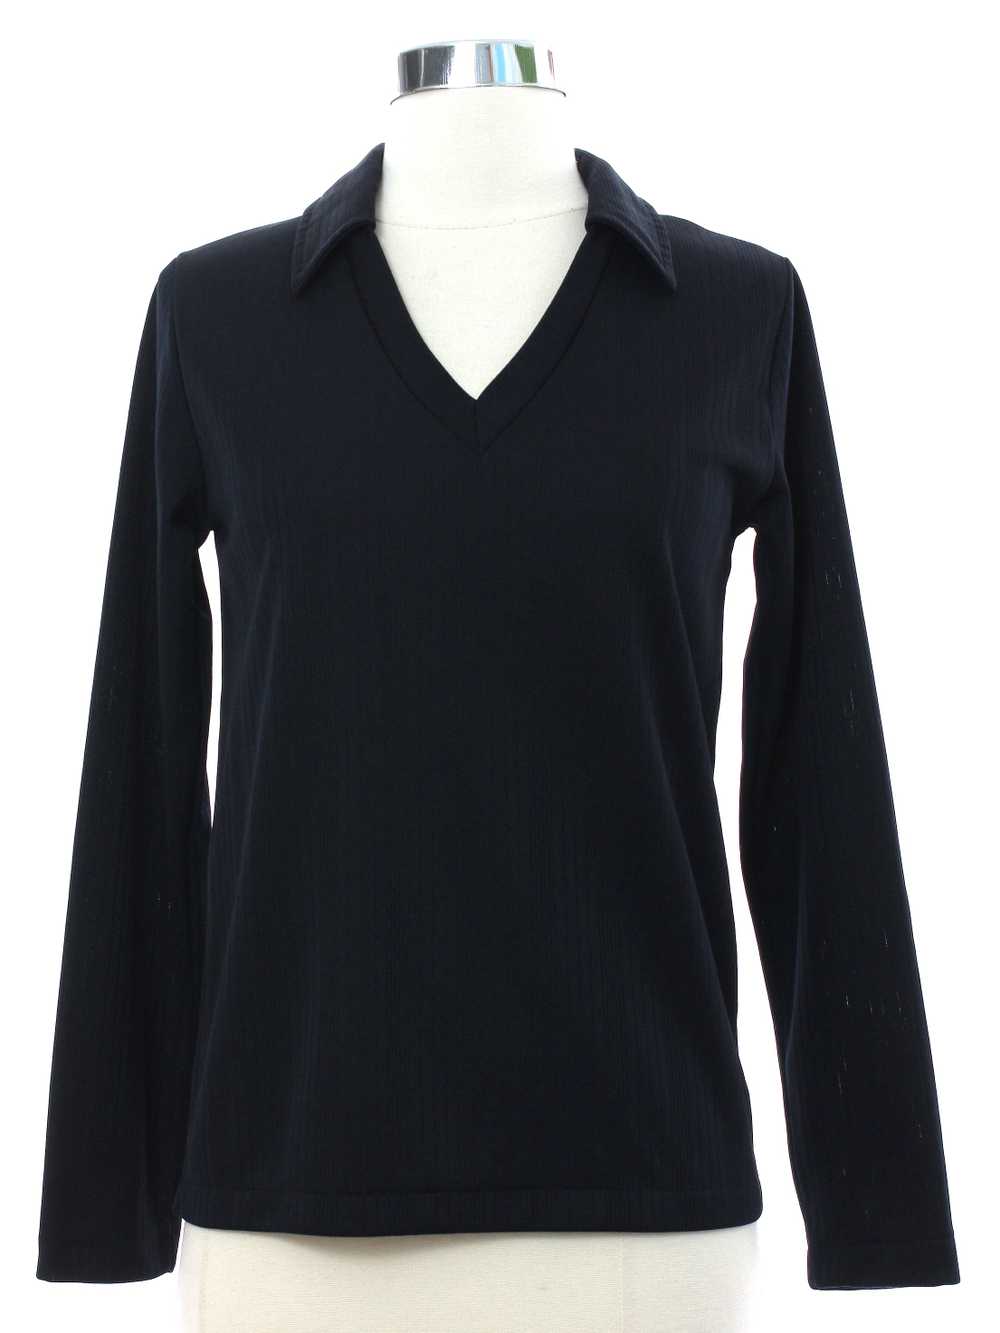 1970's Womens Black Mod Knit Shirt - image 1